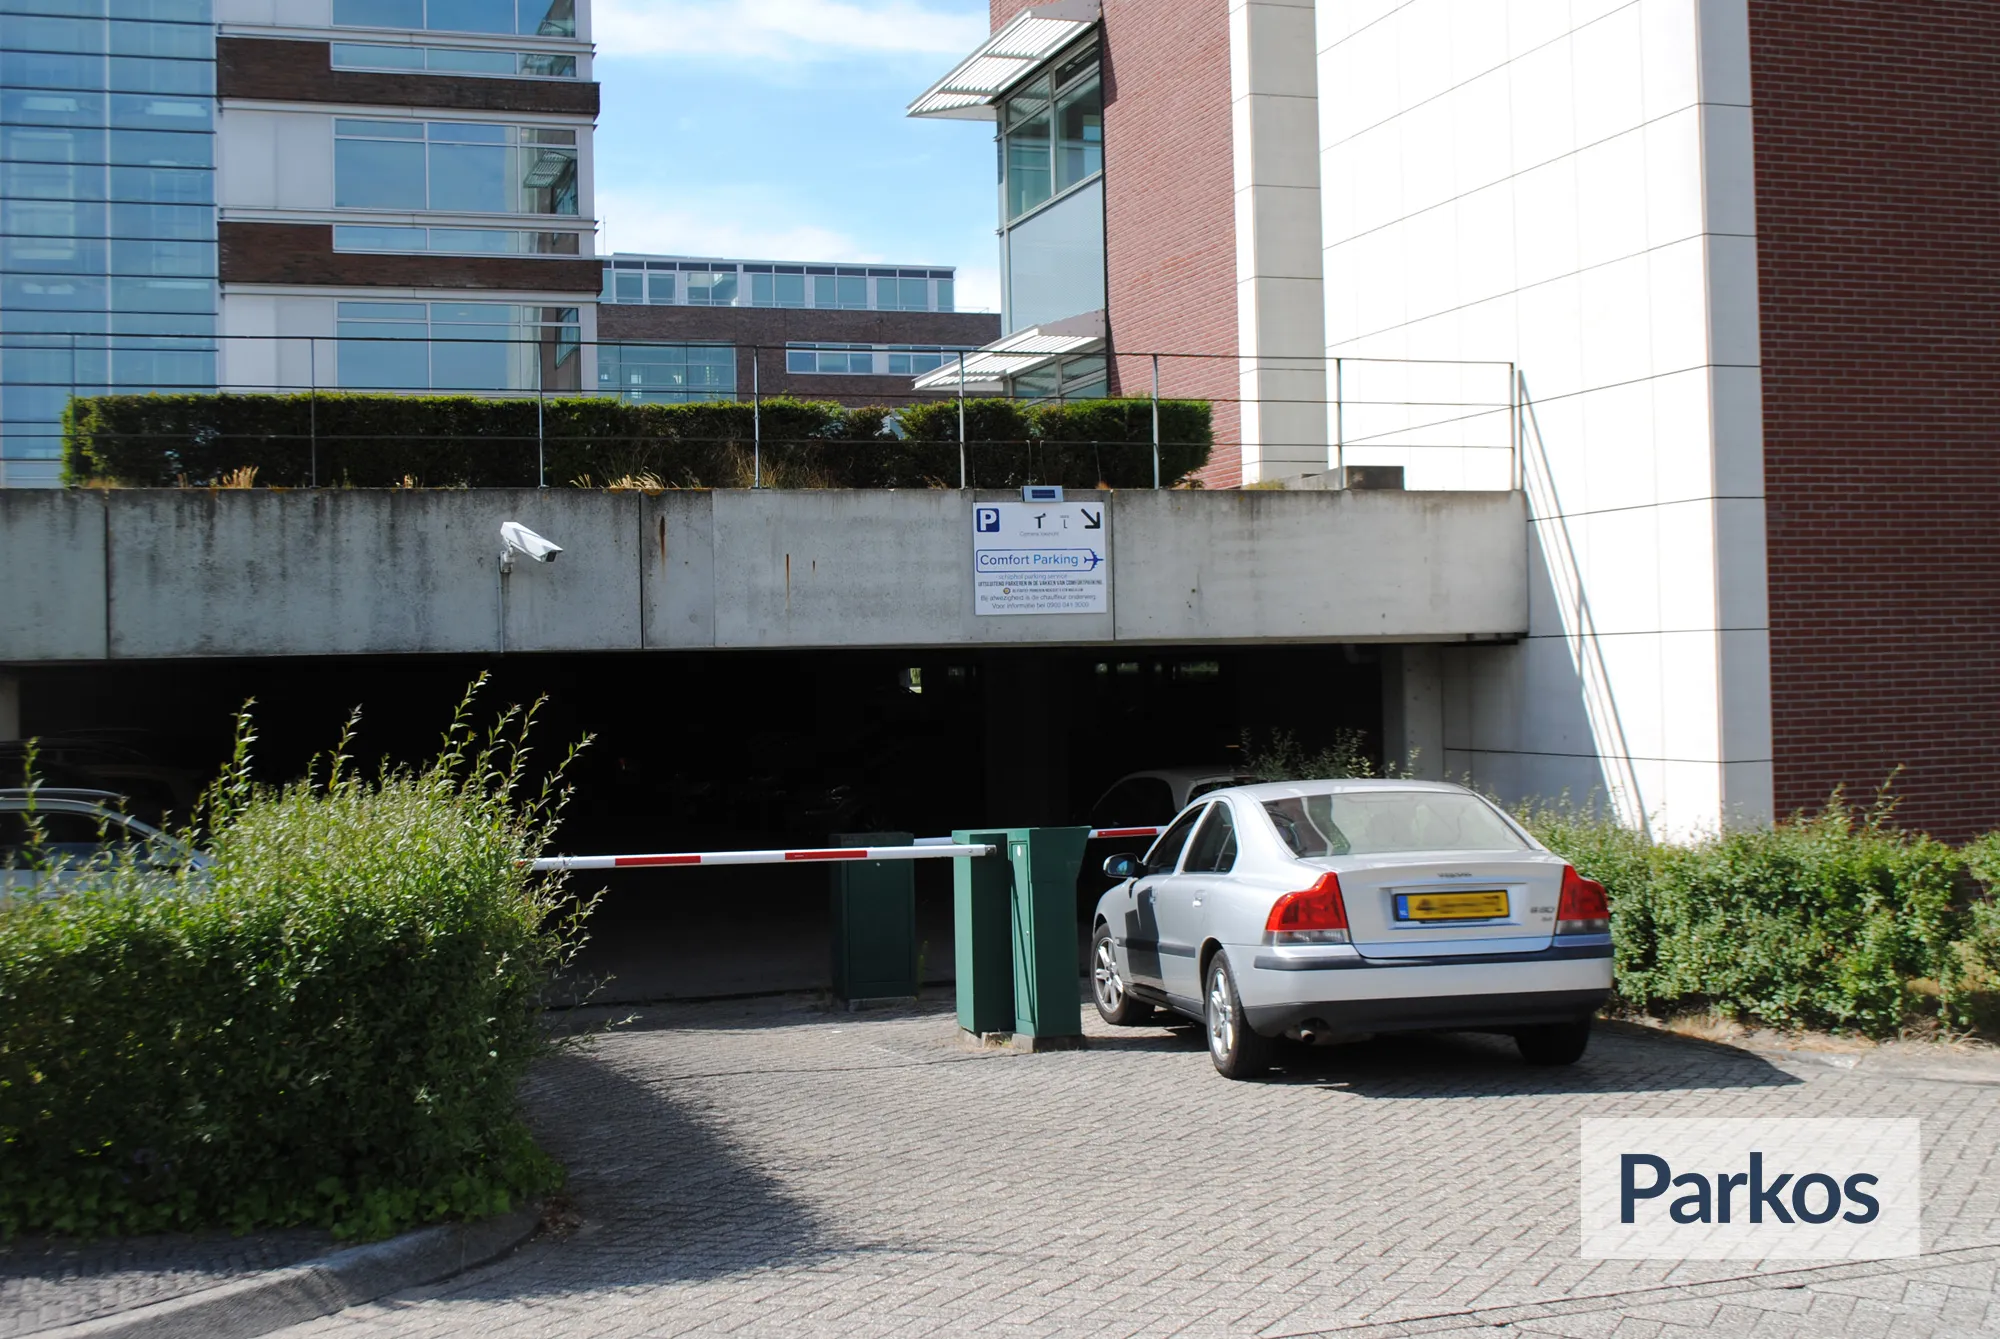 Comfort Parking - Schiphol Parking - picture 1